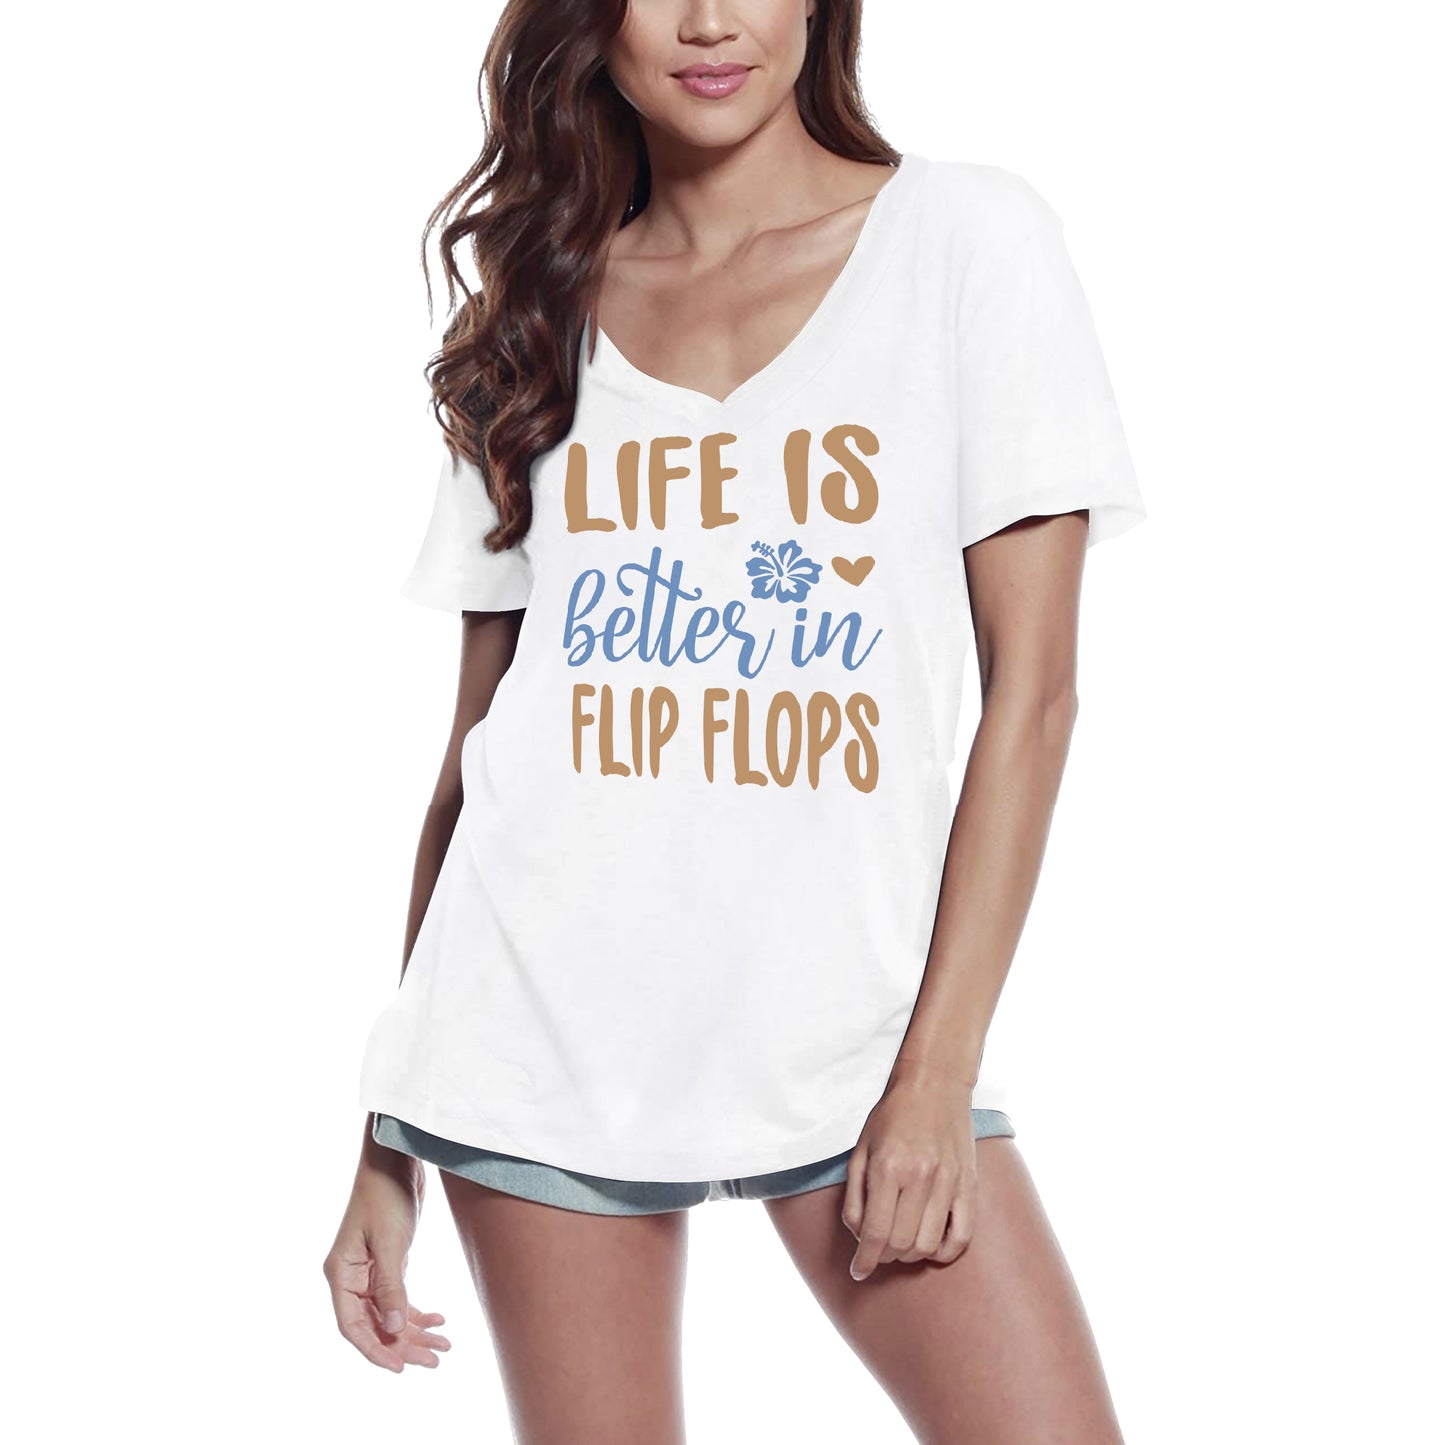 ULTRABASIC Women's T-Shirt Life is Better in Flip Flops - Funny Short Sleeve Tee Shirt Tops